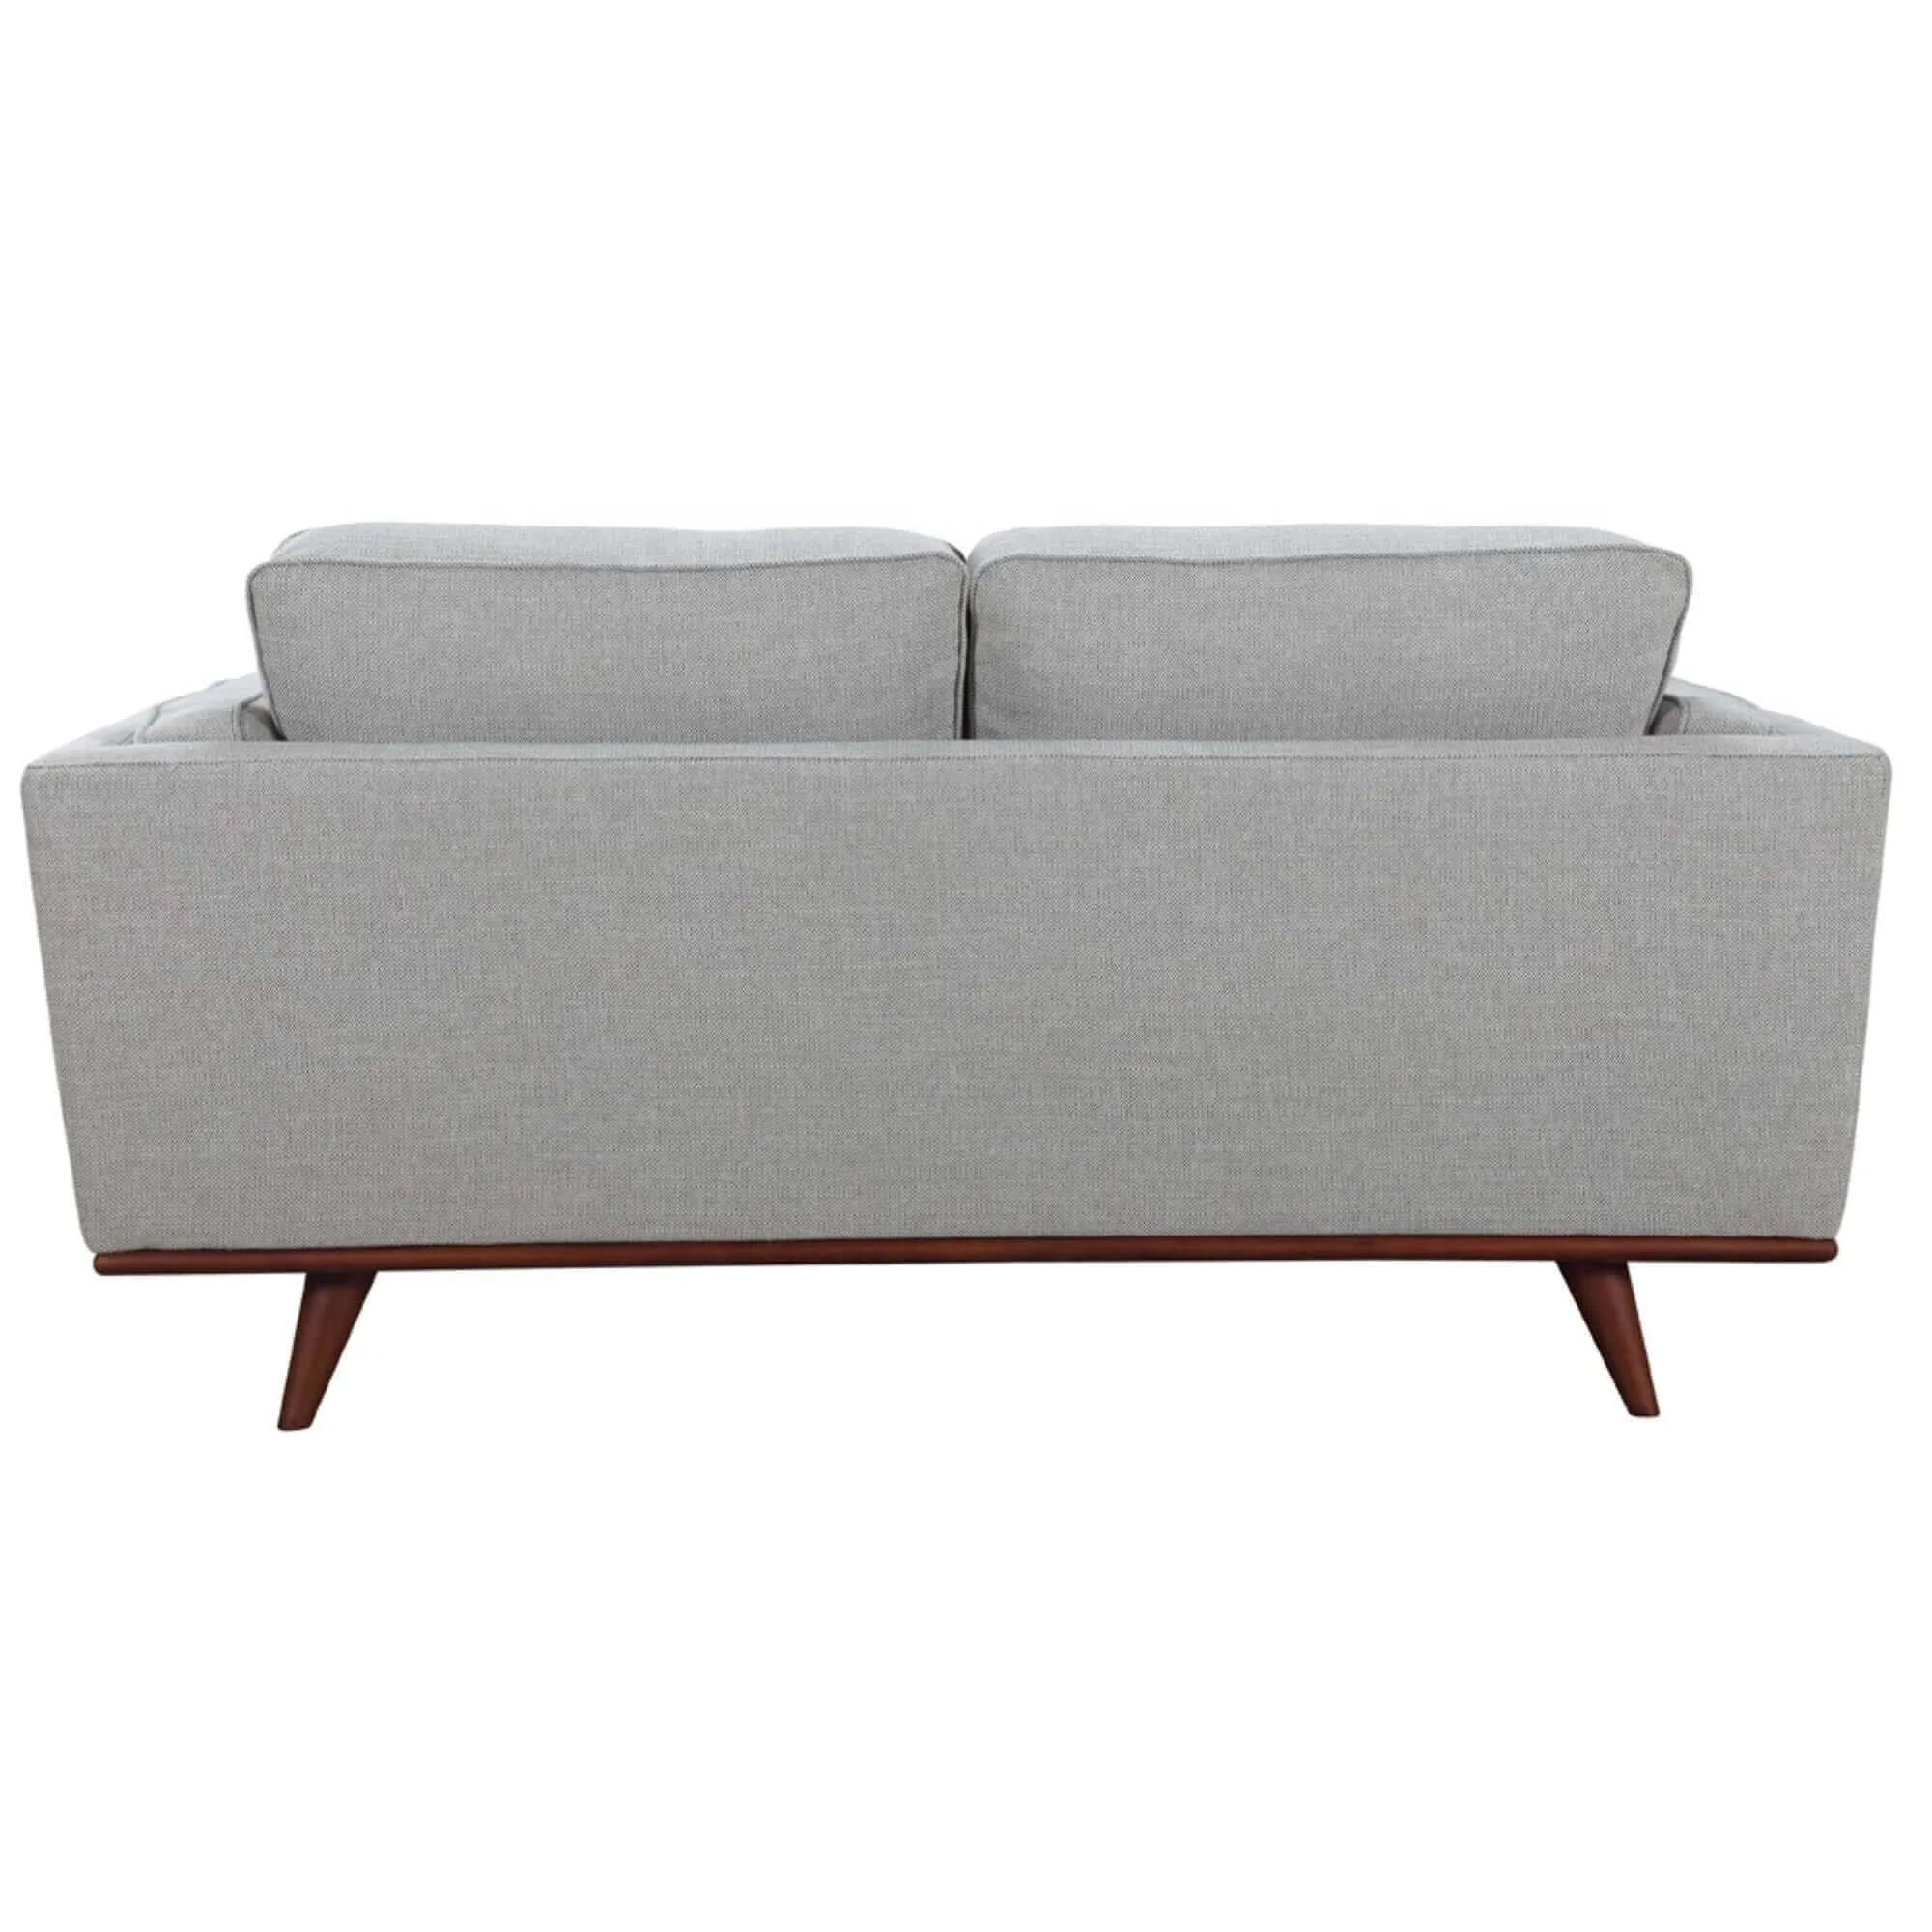 Buy Petalsoft 2 Seater Sofa Fabric Uplholstered Lounge Couch – Upinteriors-Upinteriors